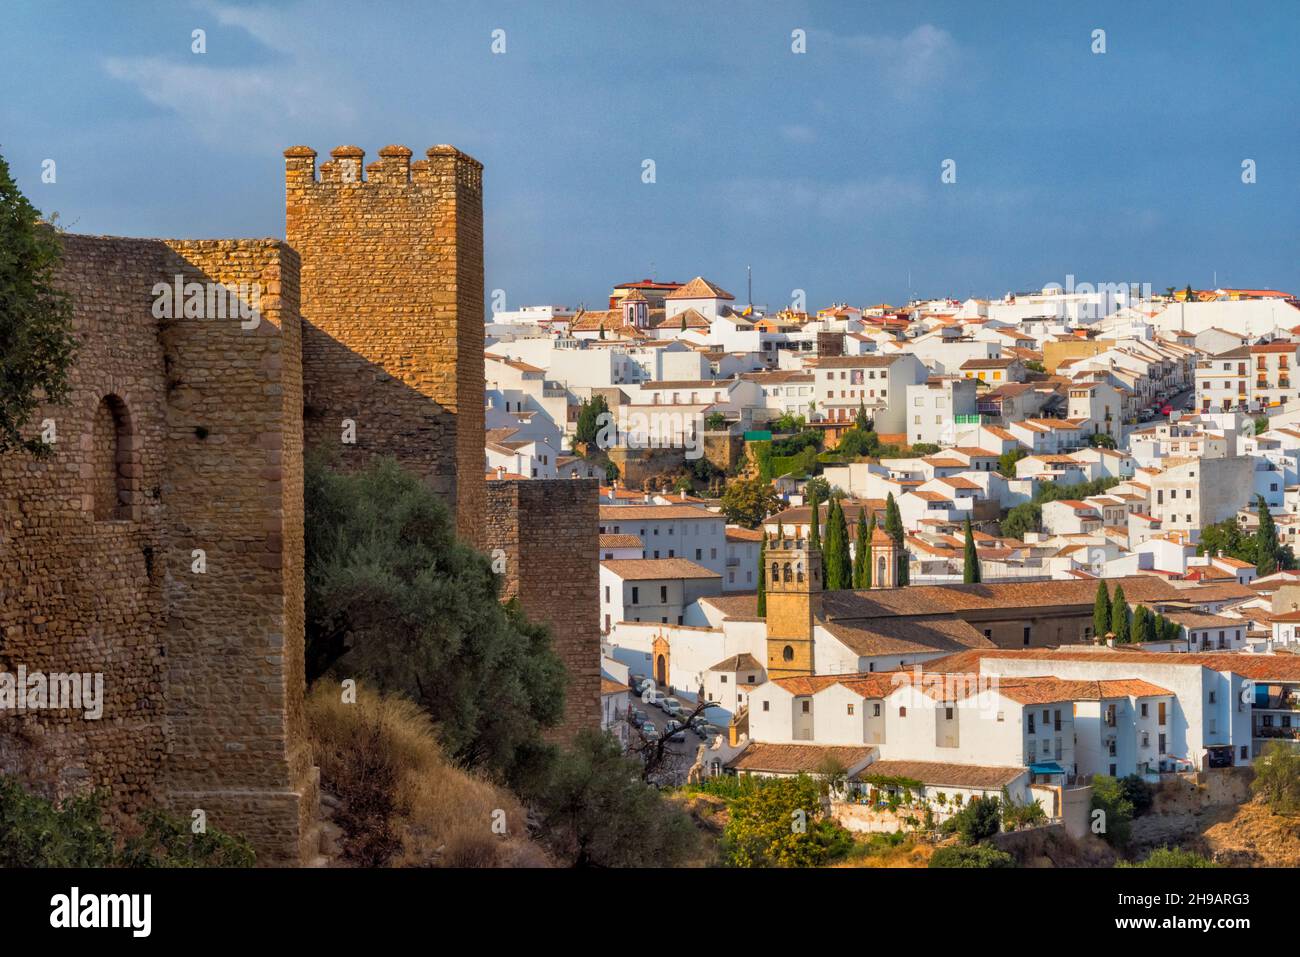 Old citadels and white houses, Ronda, Malaga Province, Andalusia Autonomous Community, Spain Stock Photo